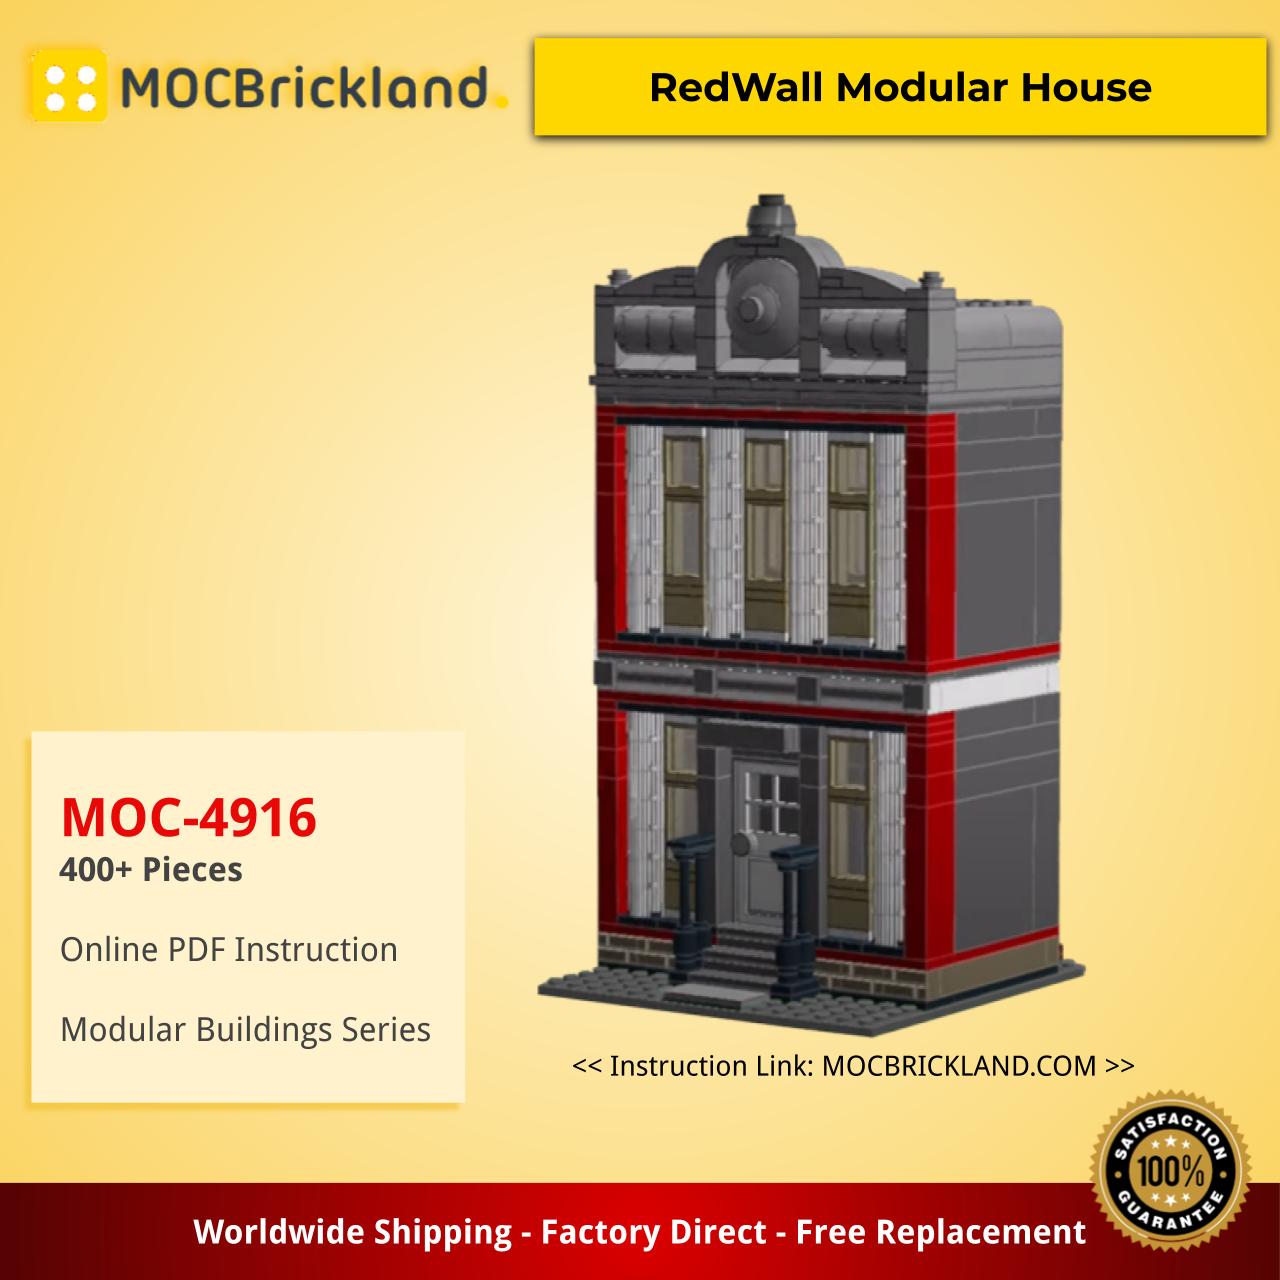 Modular Buildings MOC-4916 RedWall Modular House by Keep On Bricking MOCBRICKLAND